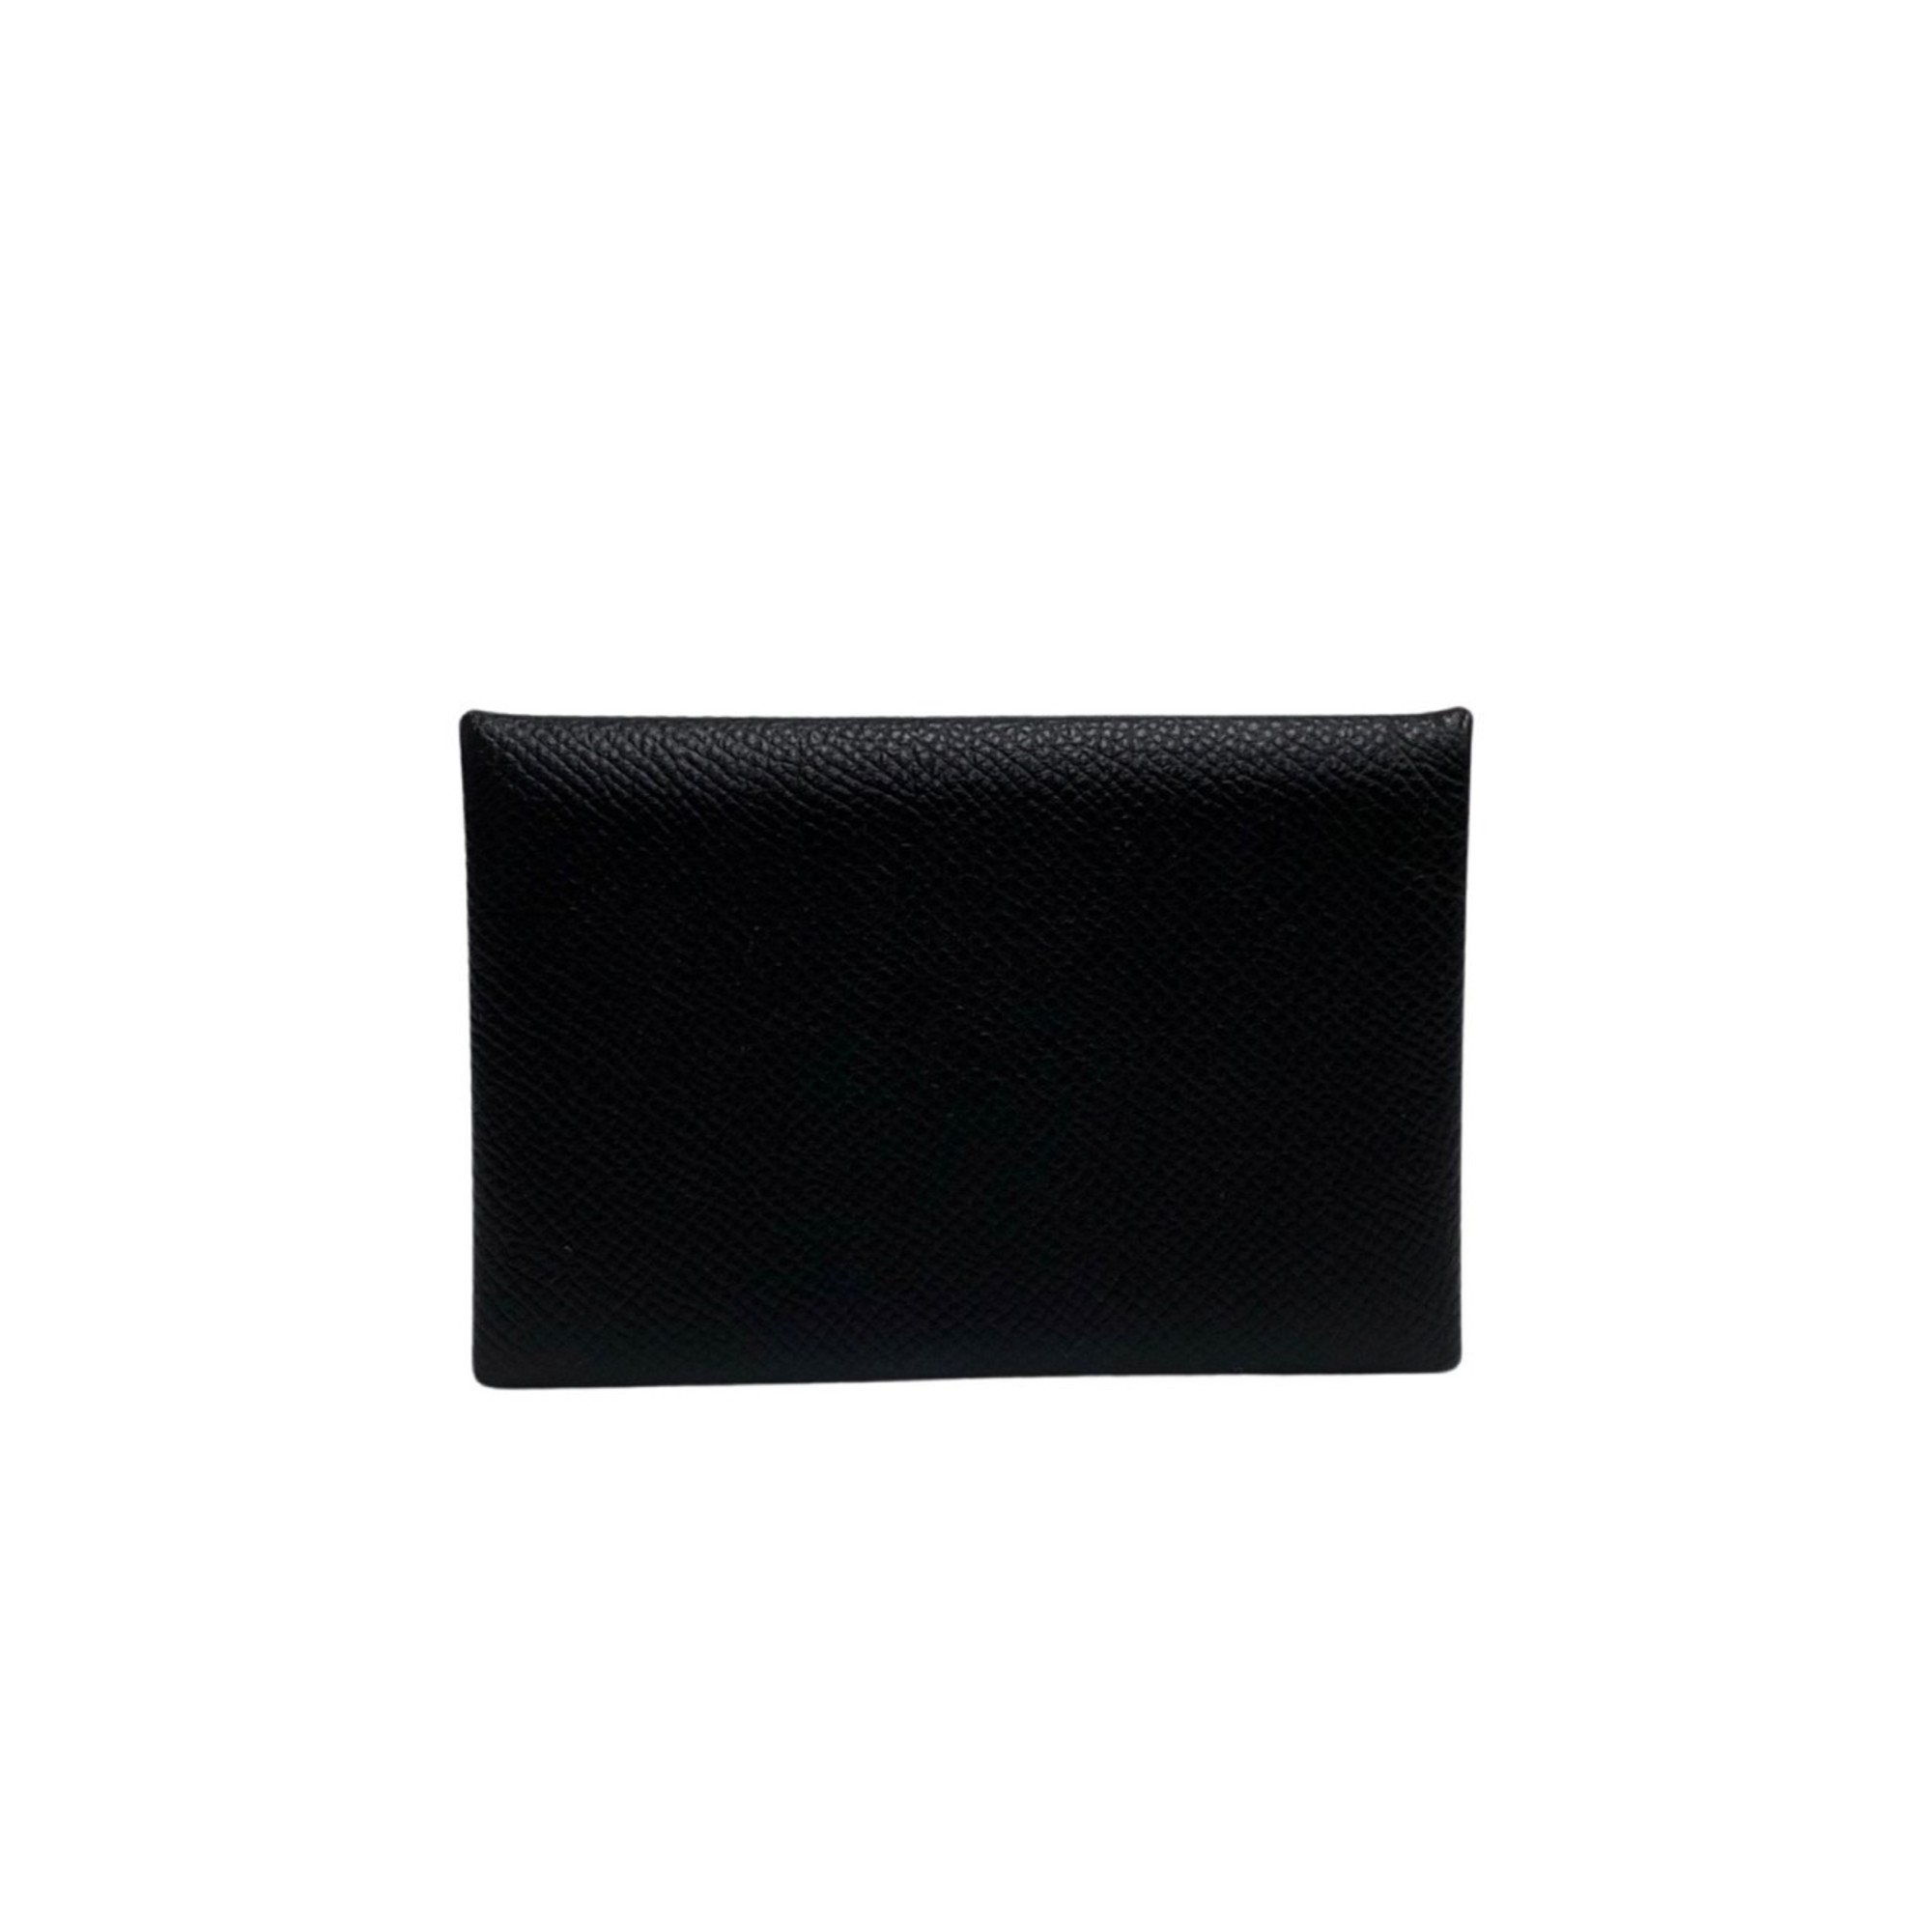 Z engraved HERMES Hermes Calvi Leather Genuine Card Case Business Holder Coin Mini Wallet Black